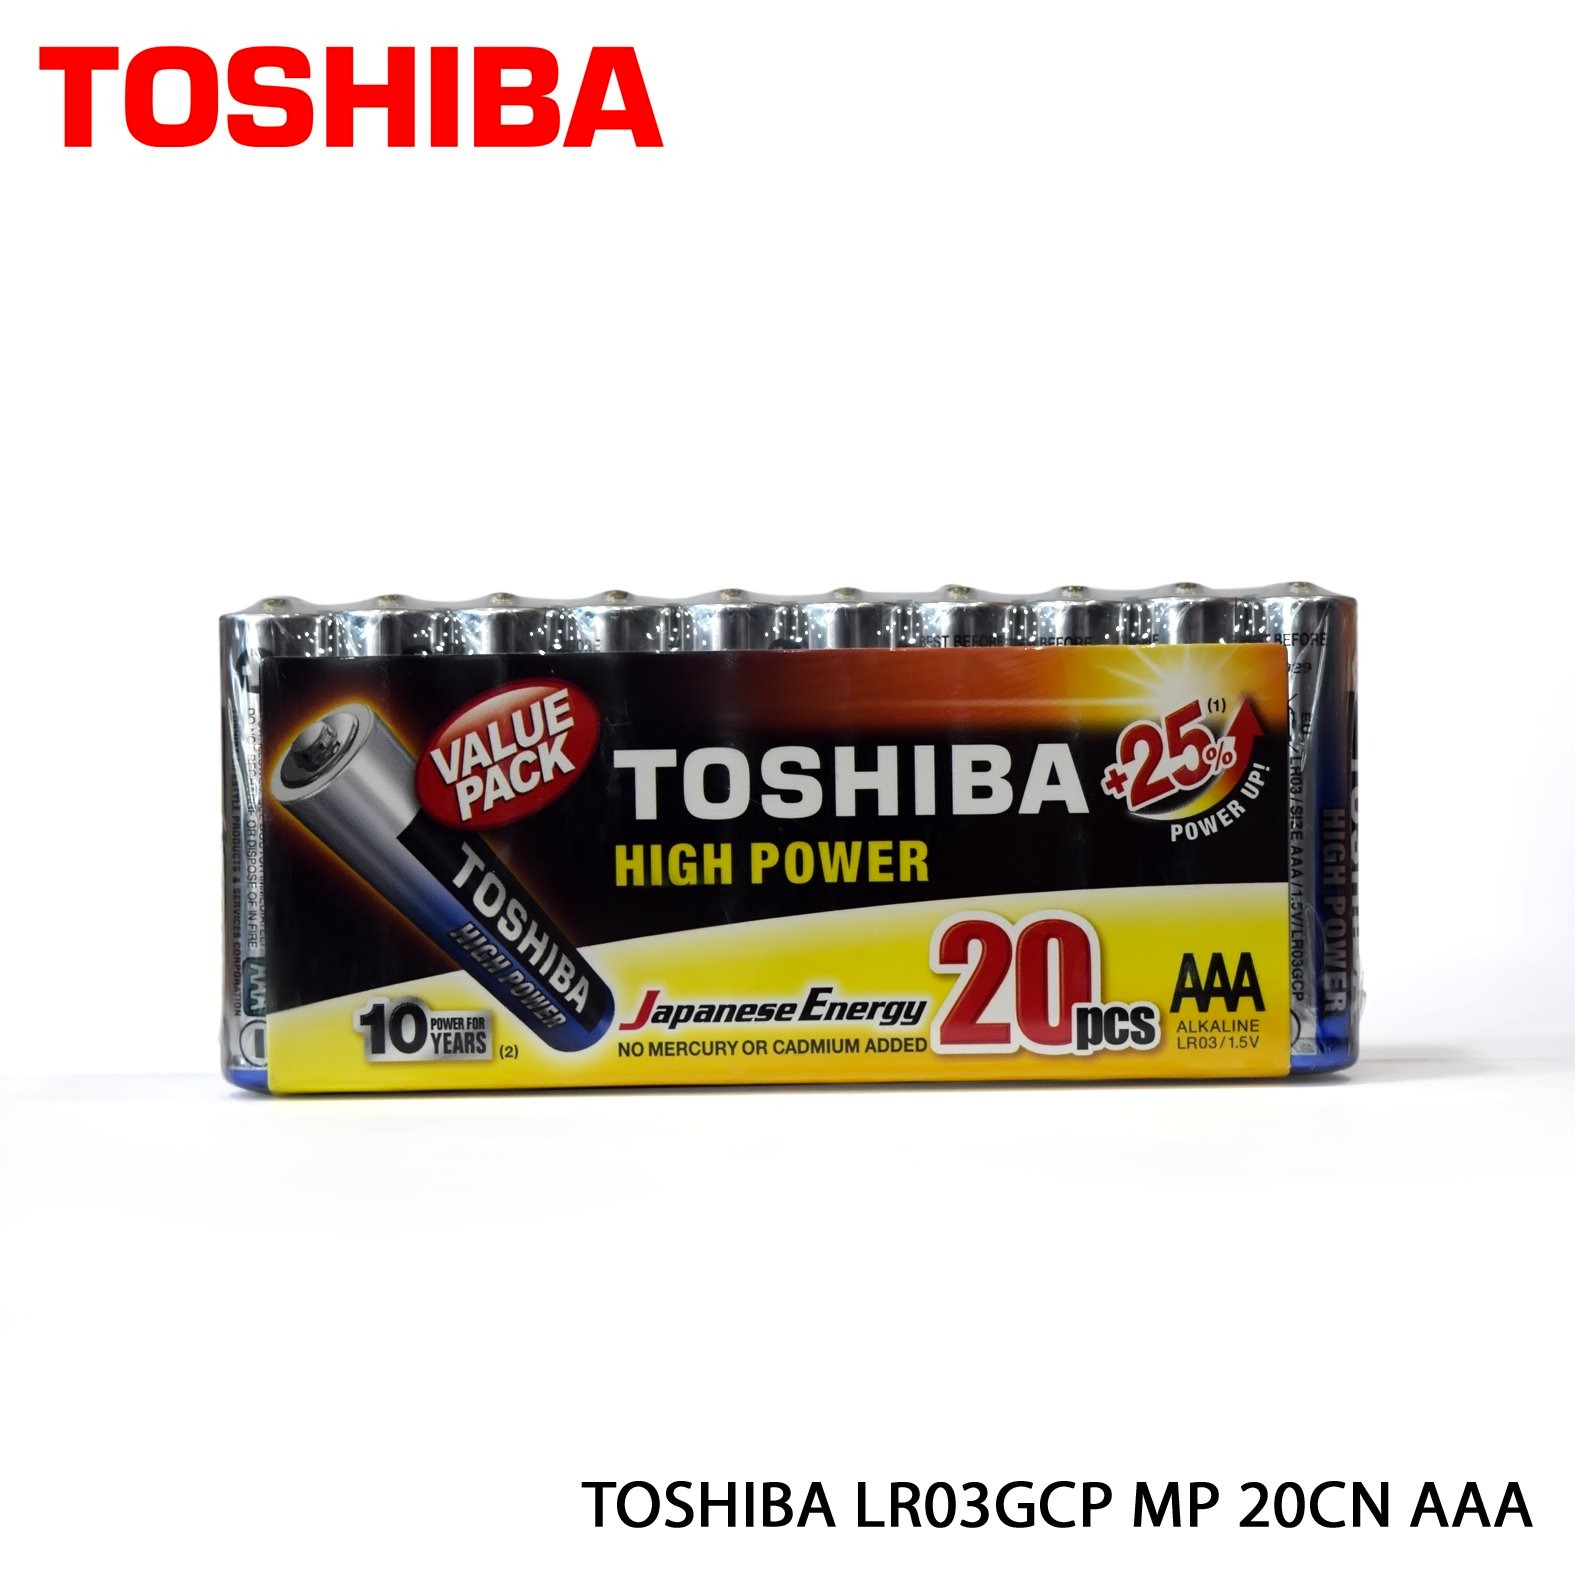 TOSHIBA LR03GCP MP 20CN AAA